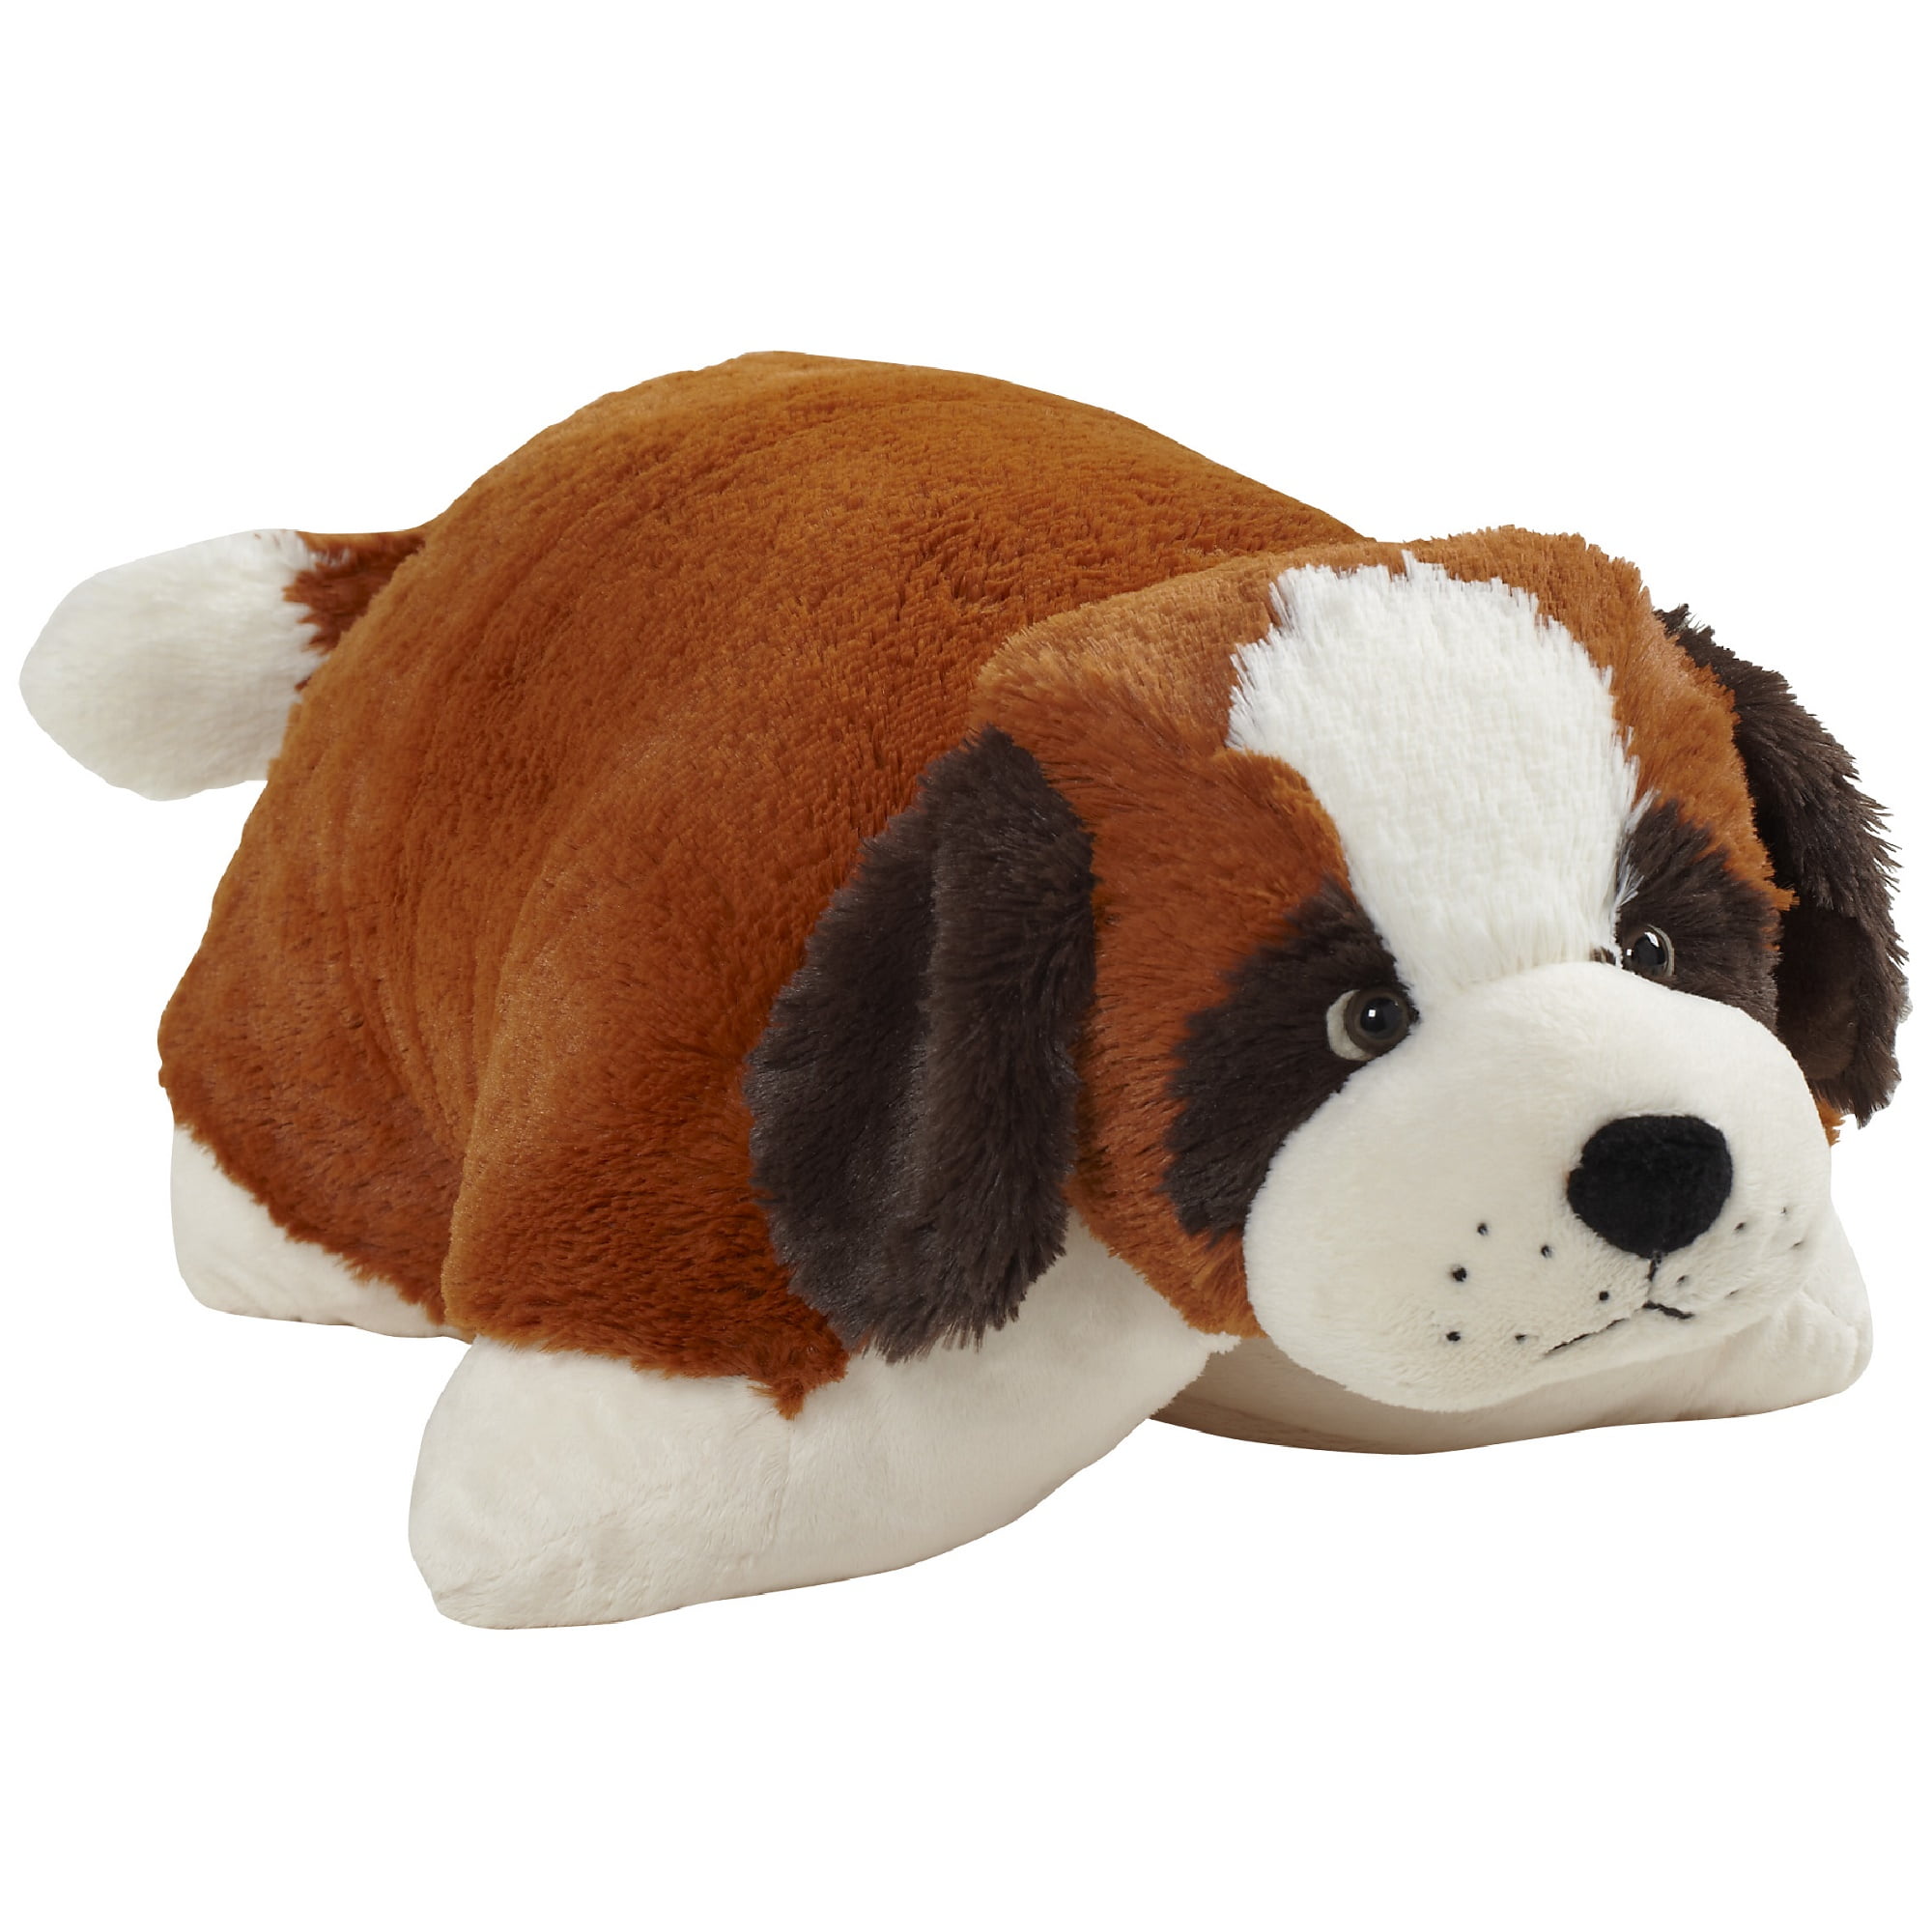 Pillow Pets Original Wild Fox 18quot Stuffed Animal Plush Toy for sale online